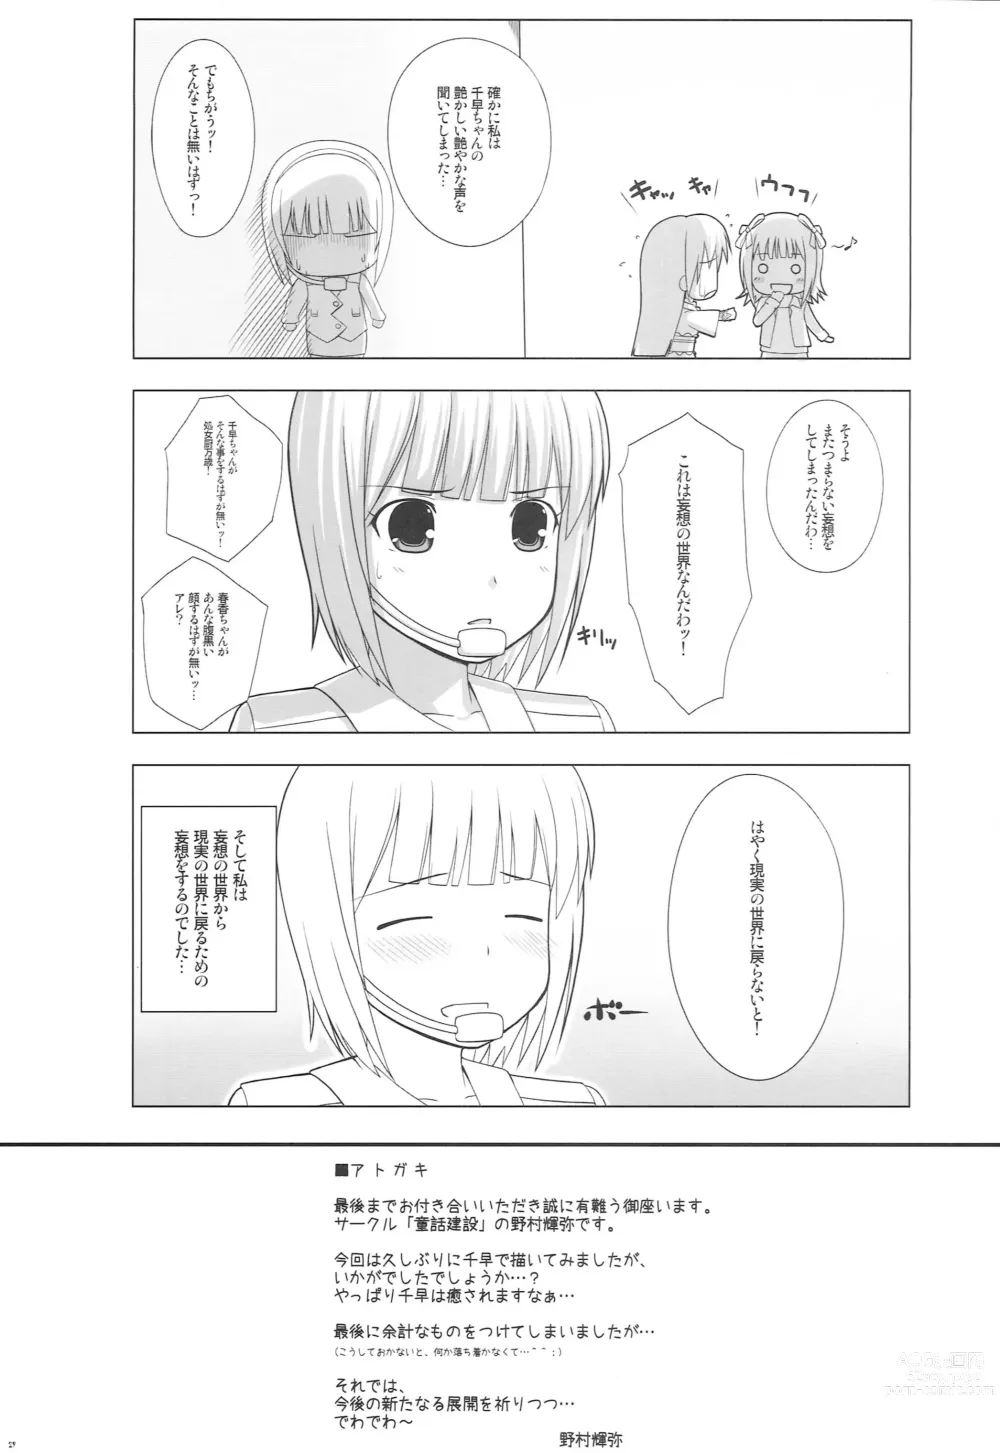 Page 28 of doujinshi BAD COMMUNICATION? 08